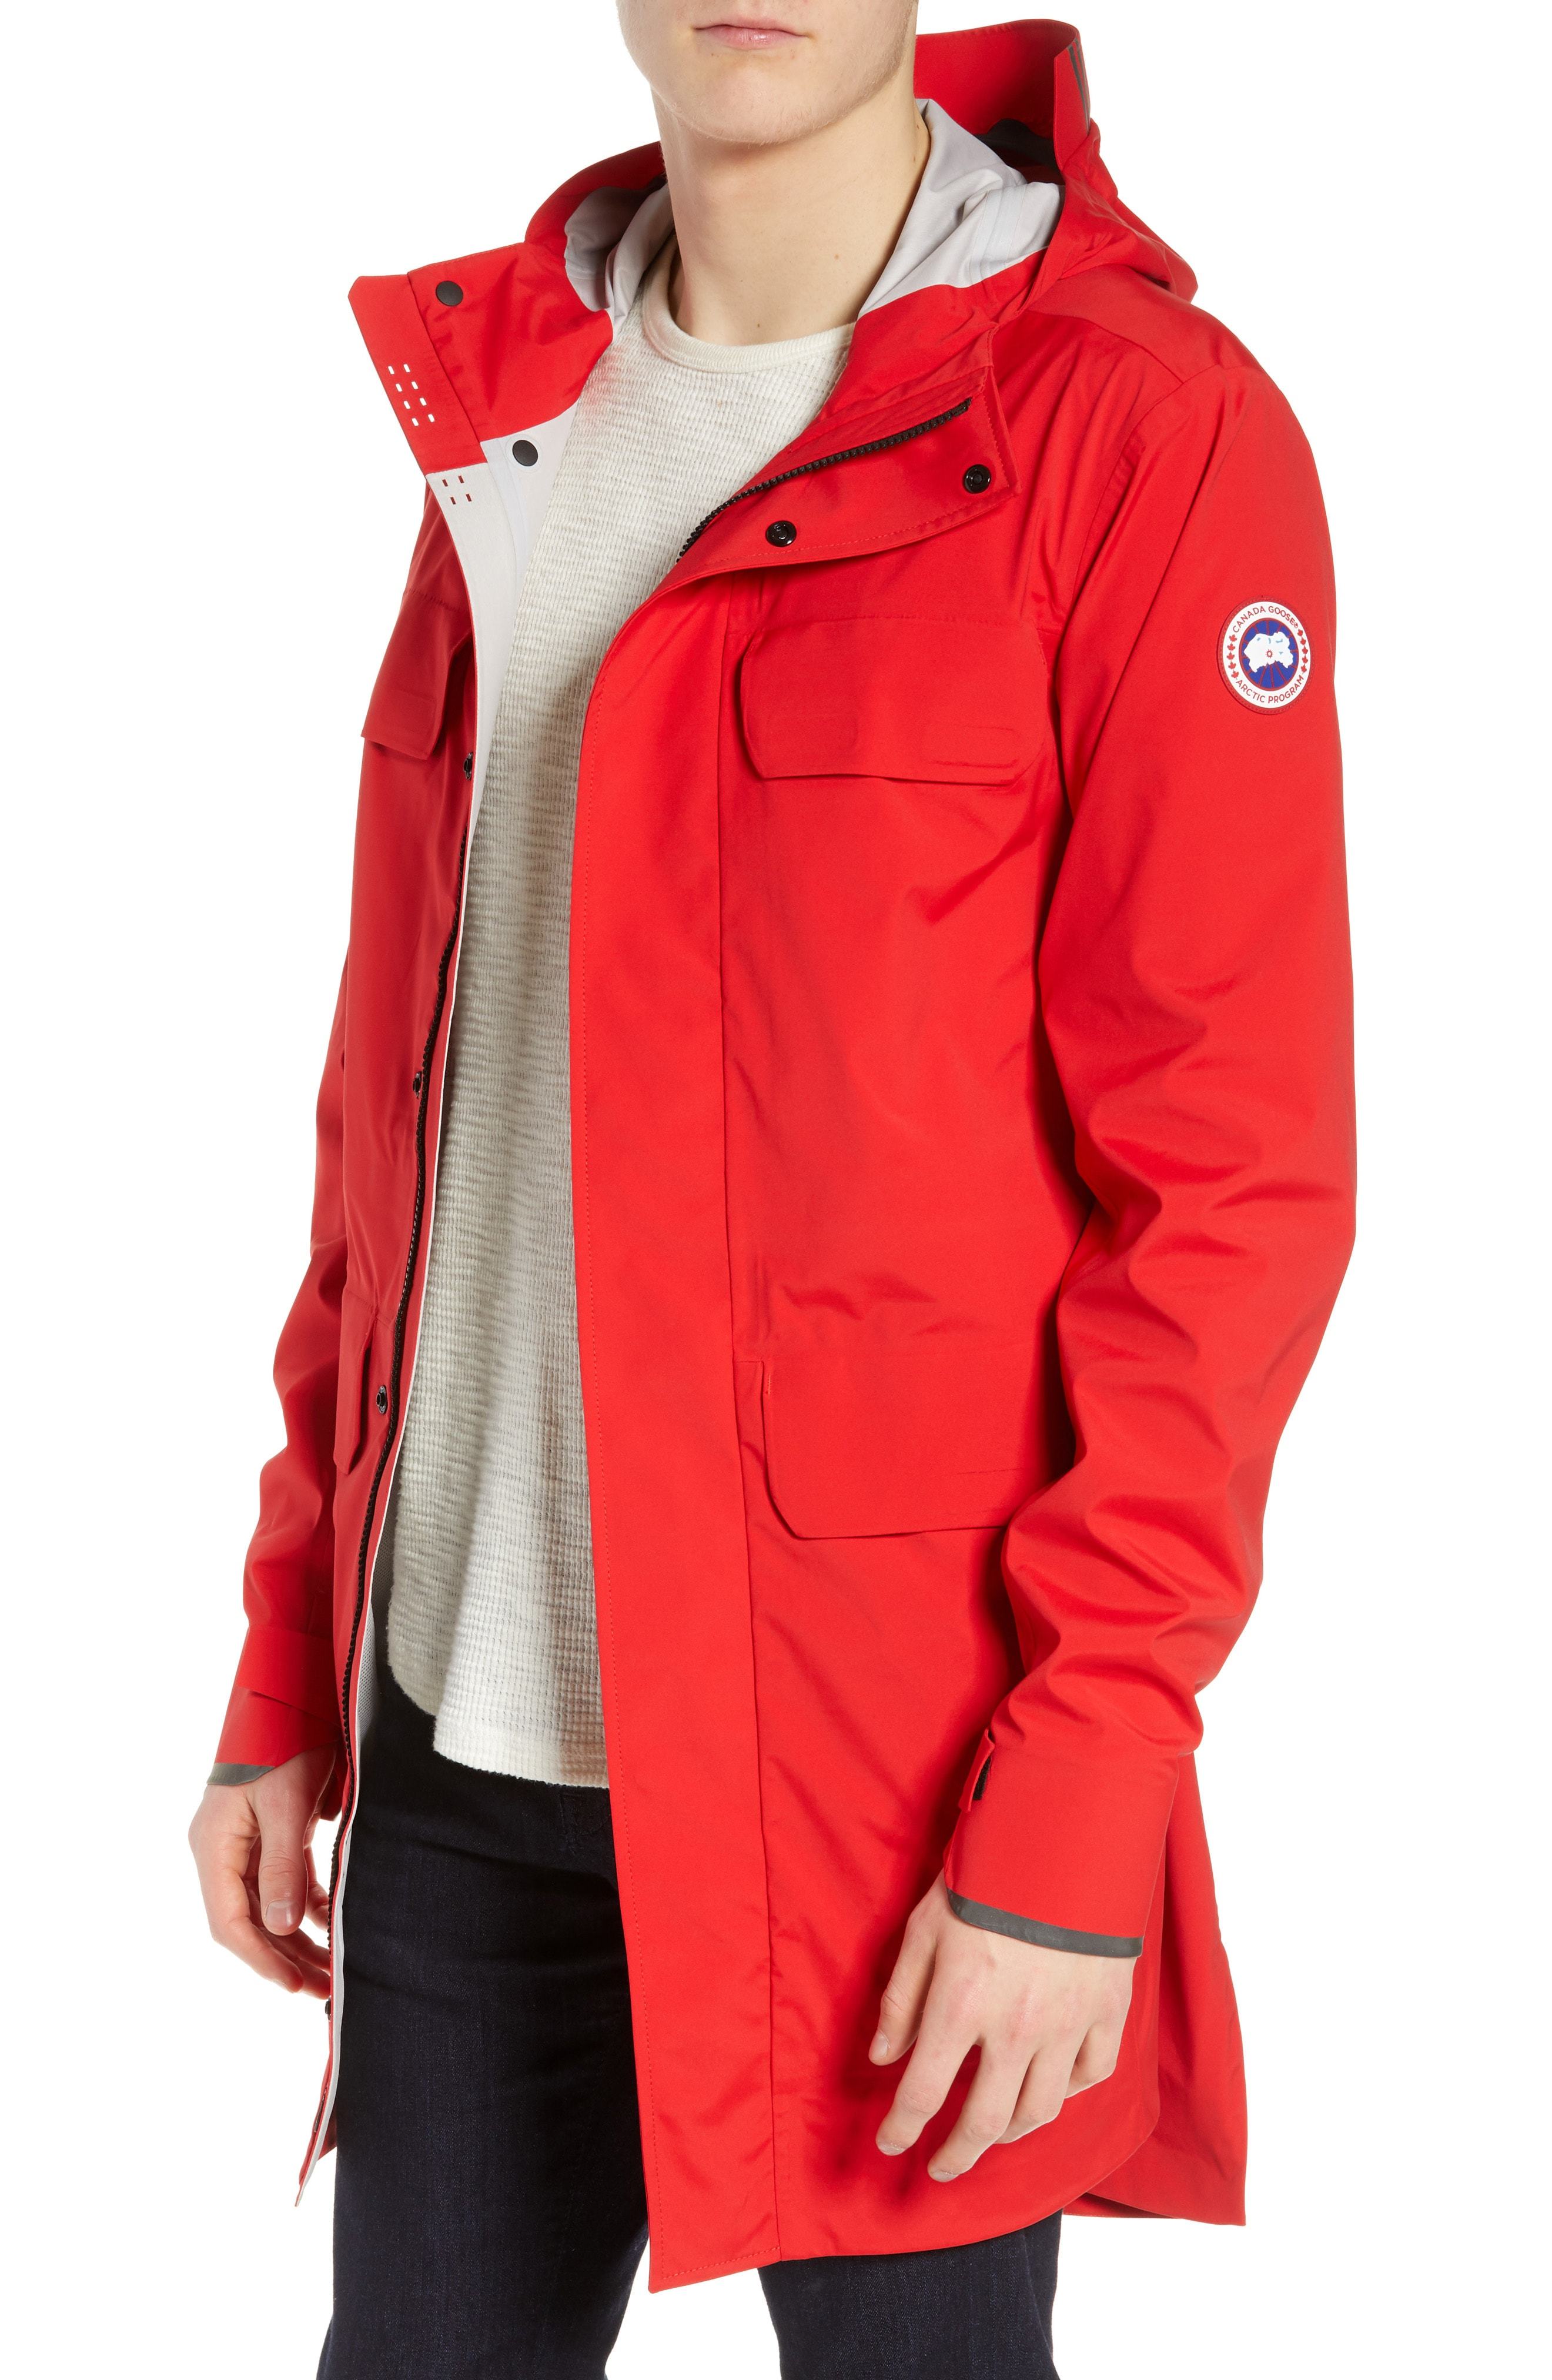 Canada Goose Seawolf Regular Fit Packable Waterproof Jacket, $750 